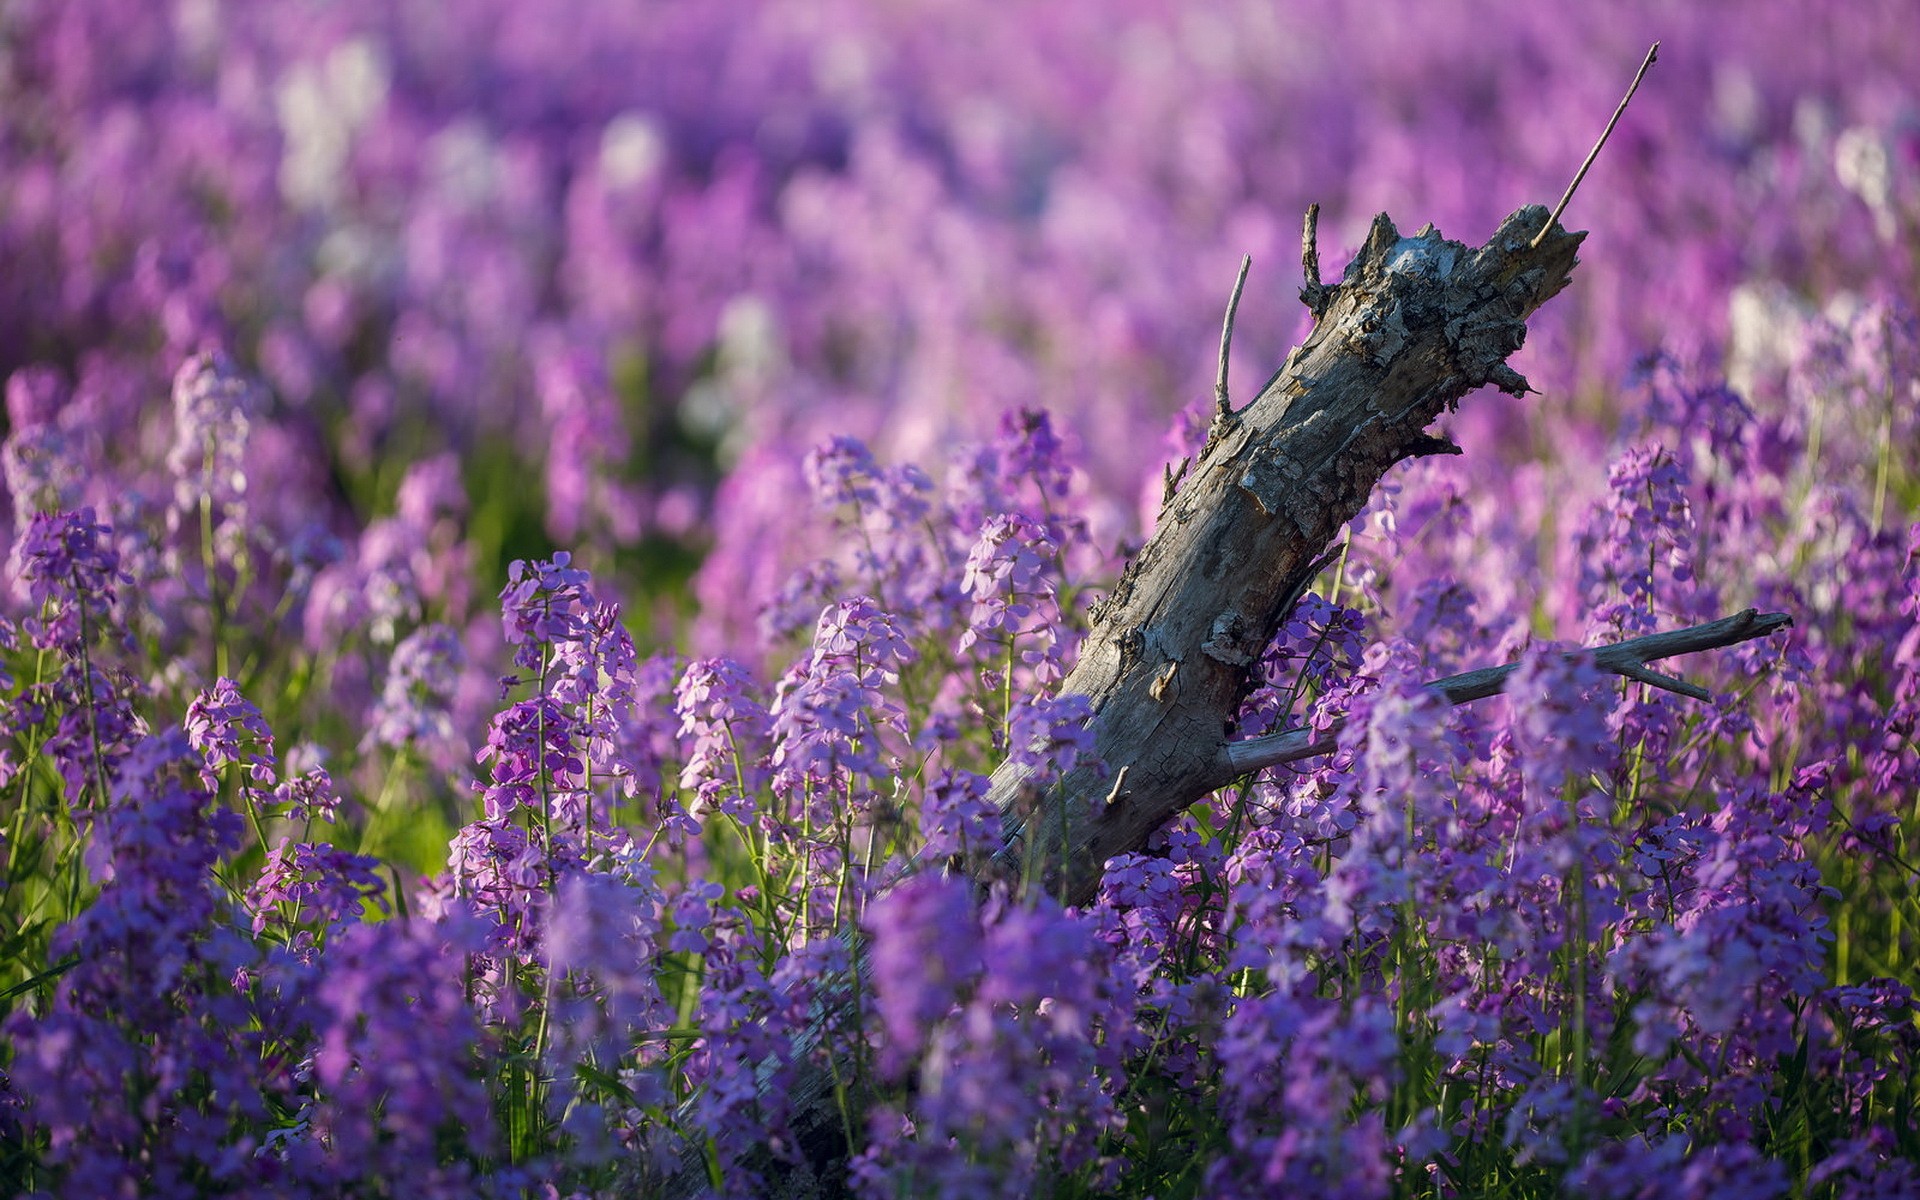 General 1920x1200 flowers nature plants depth of field purple flowers lavender outdoors wood